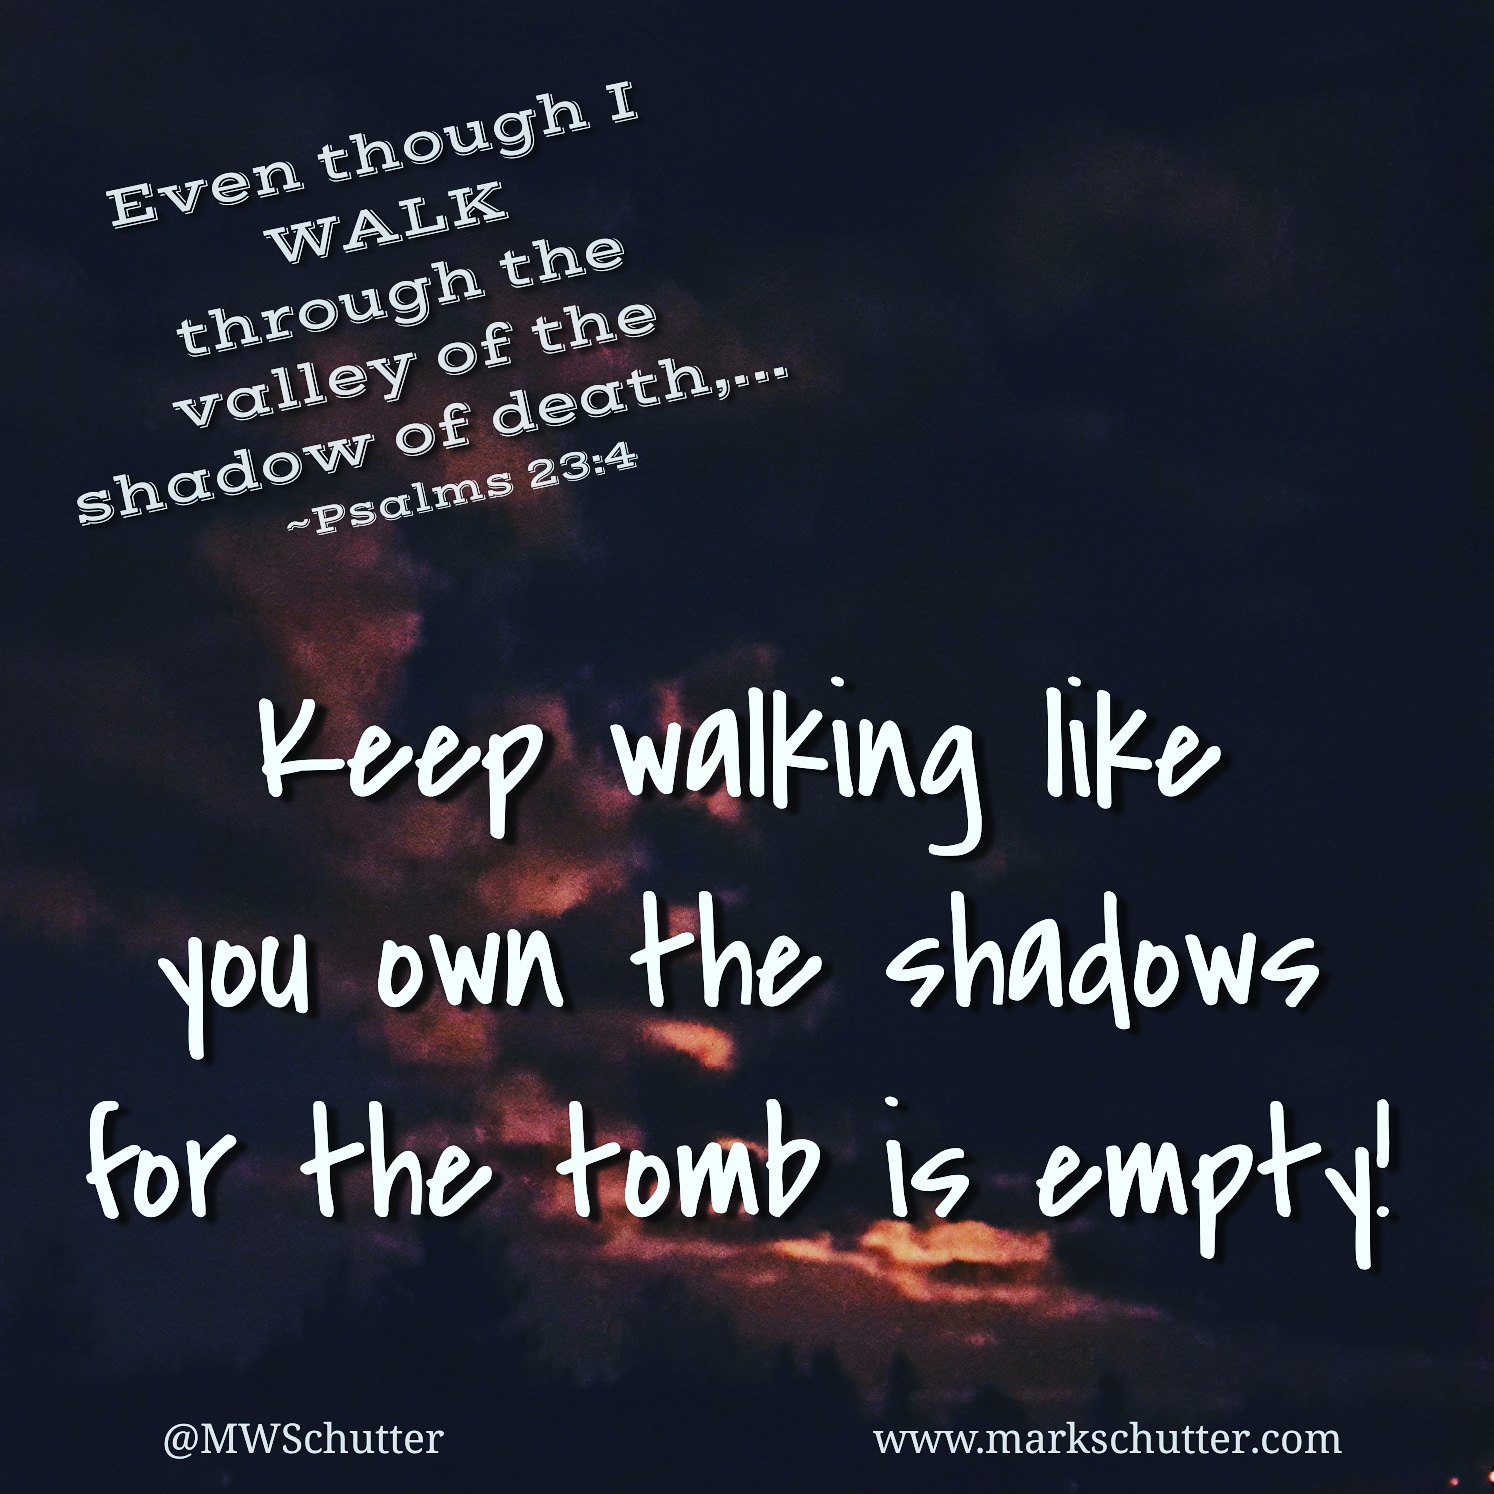 Keep walking like you own the shadows!